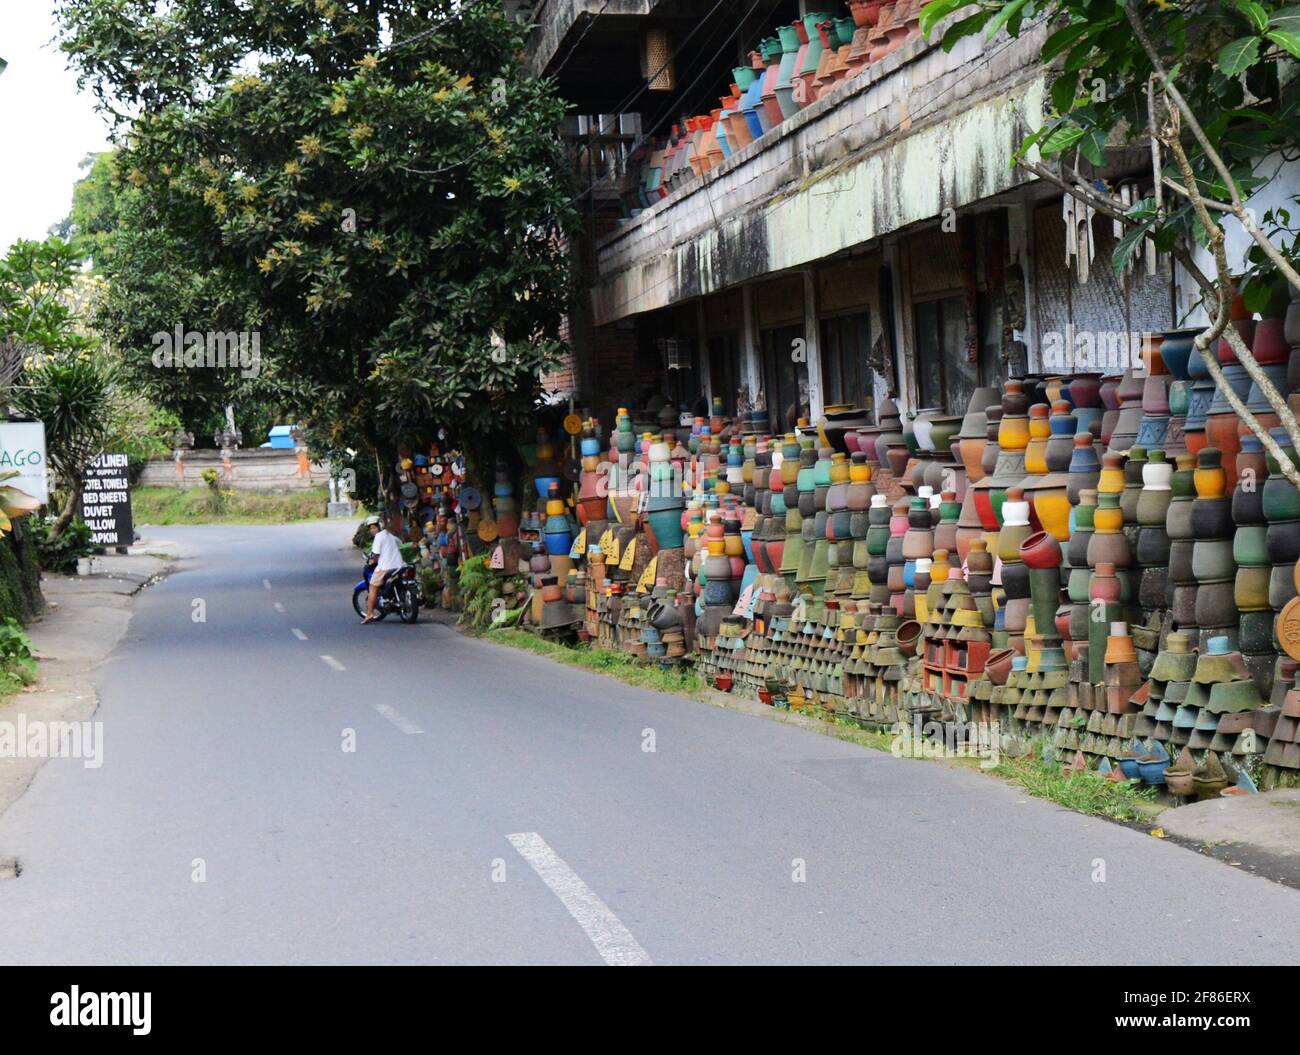 Roadside display of colourful pottery craftsmanship in Ubud, Bali. Stock Photo